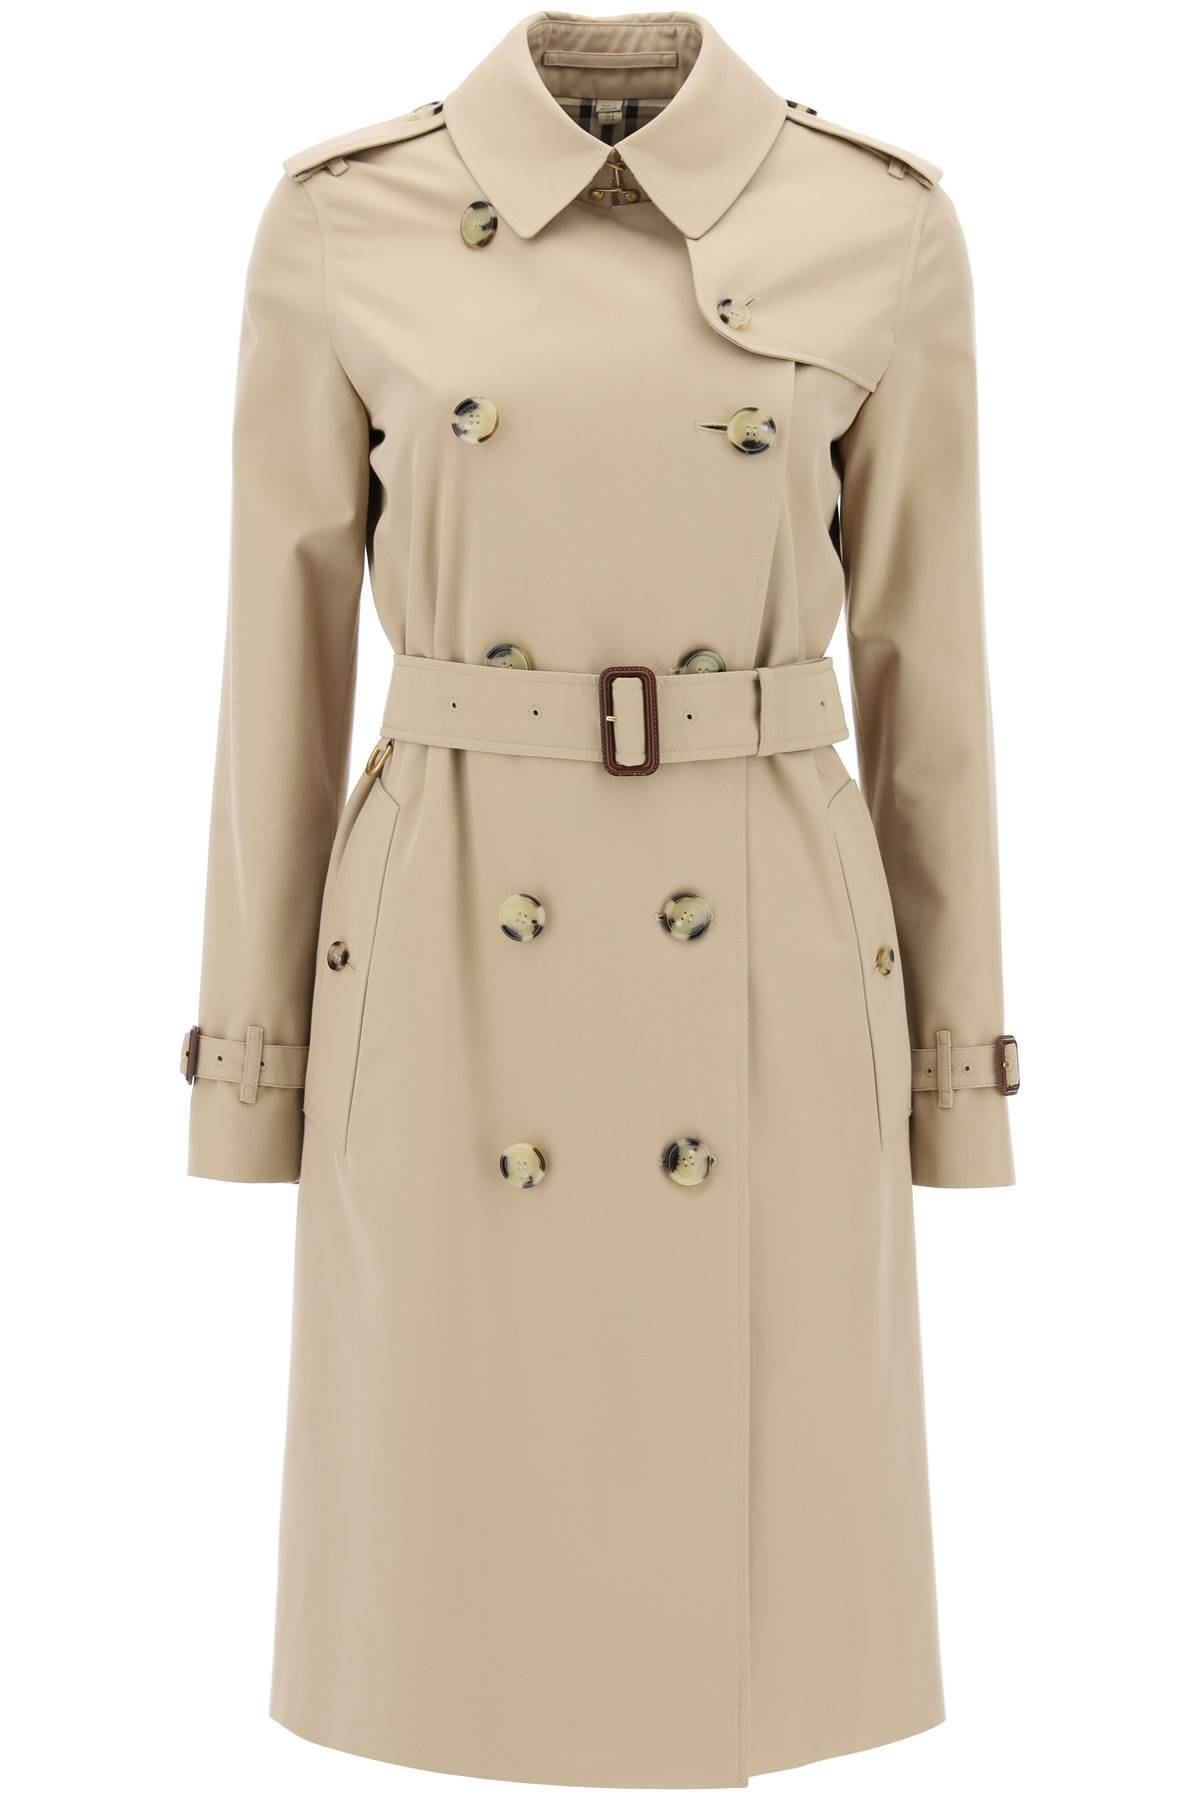 Burberry BURBERRY mid-length kensington heritage trench coat